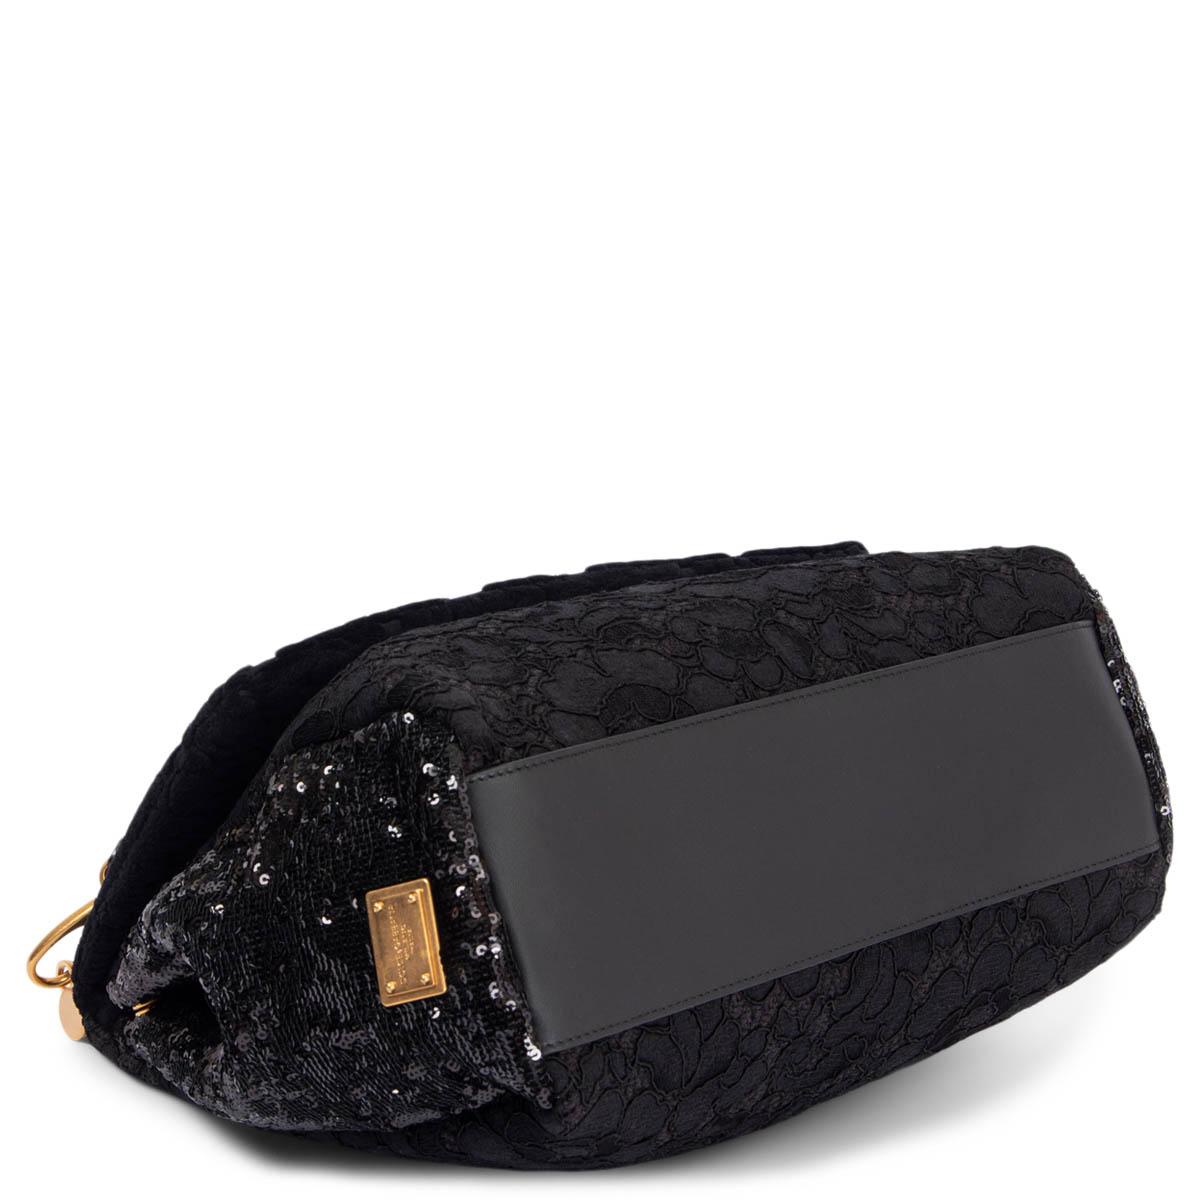 DOLCE & GABBANA black LACE & SEQUIN MISS SICILY LARGE Shoulder Bag In Excellent Condition For Sale In Zürich, CH